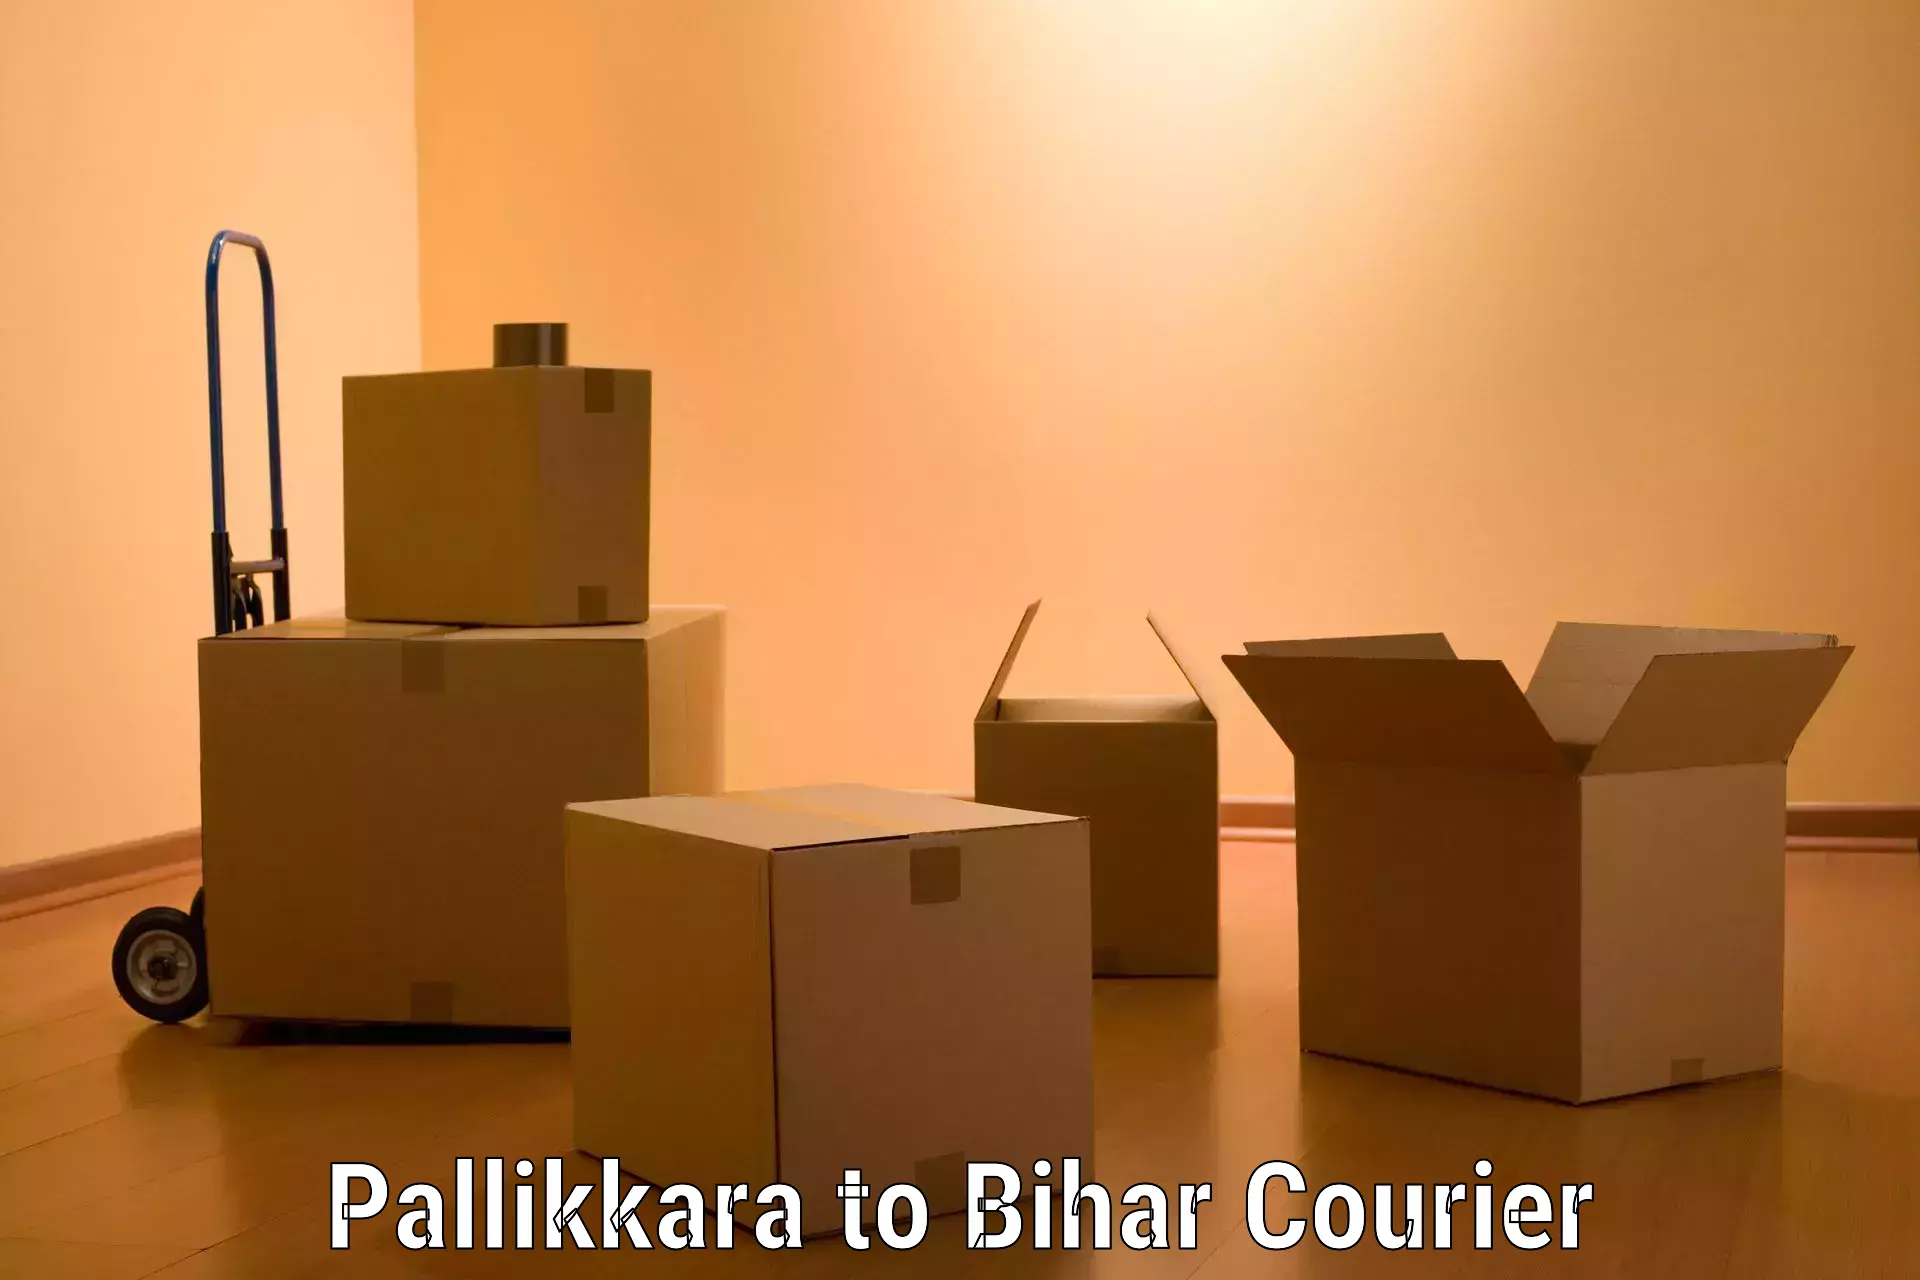 Trusted relocation experts Pallikkara to Bihar